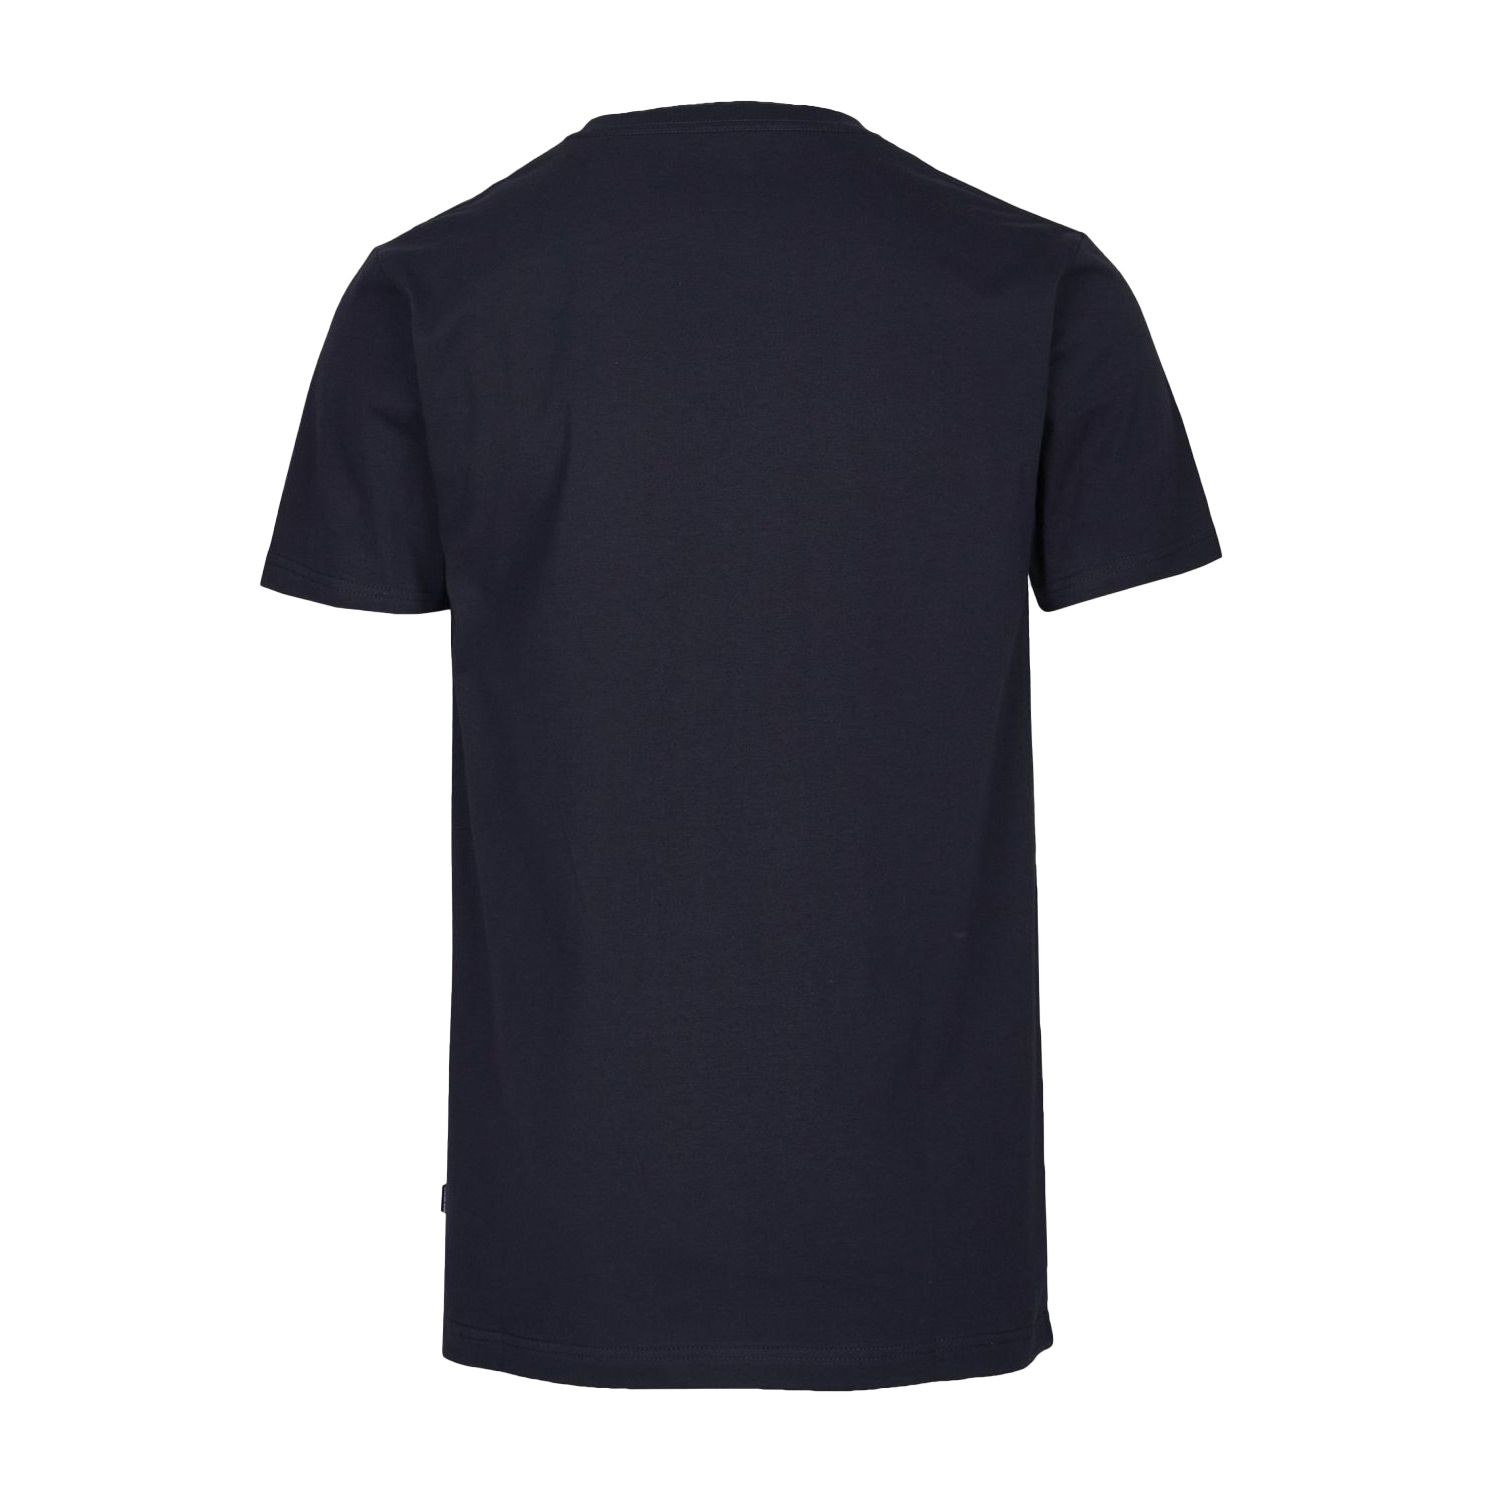 Cleptomanicx T-Shirt Embro Gull (sky captain)